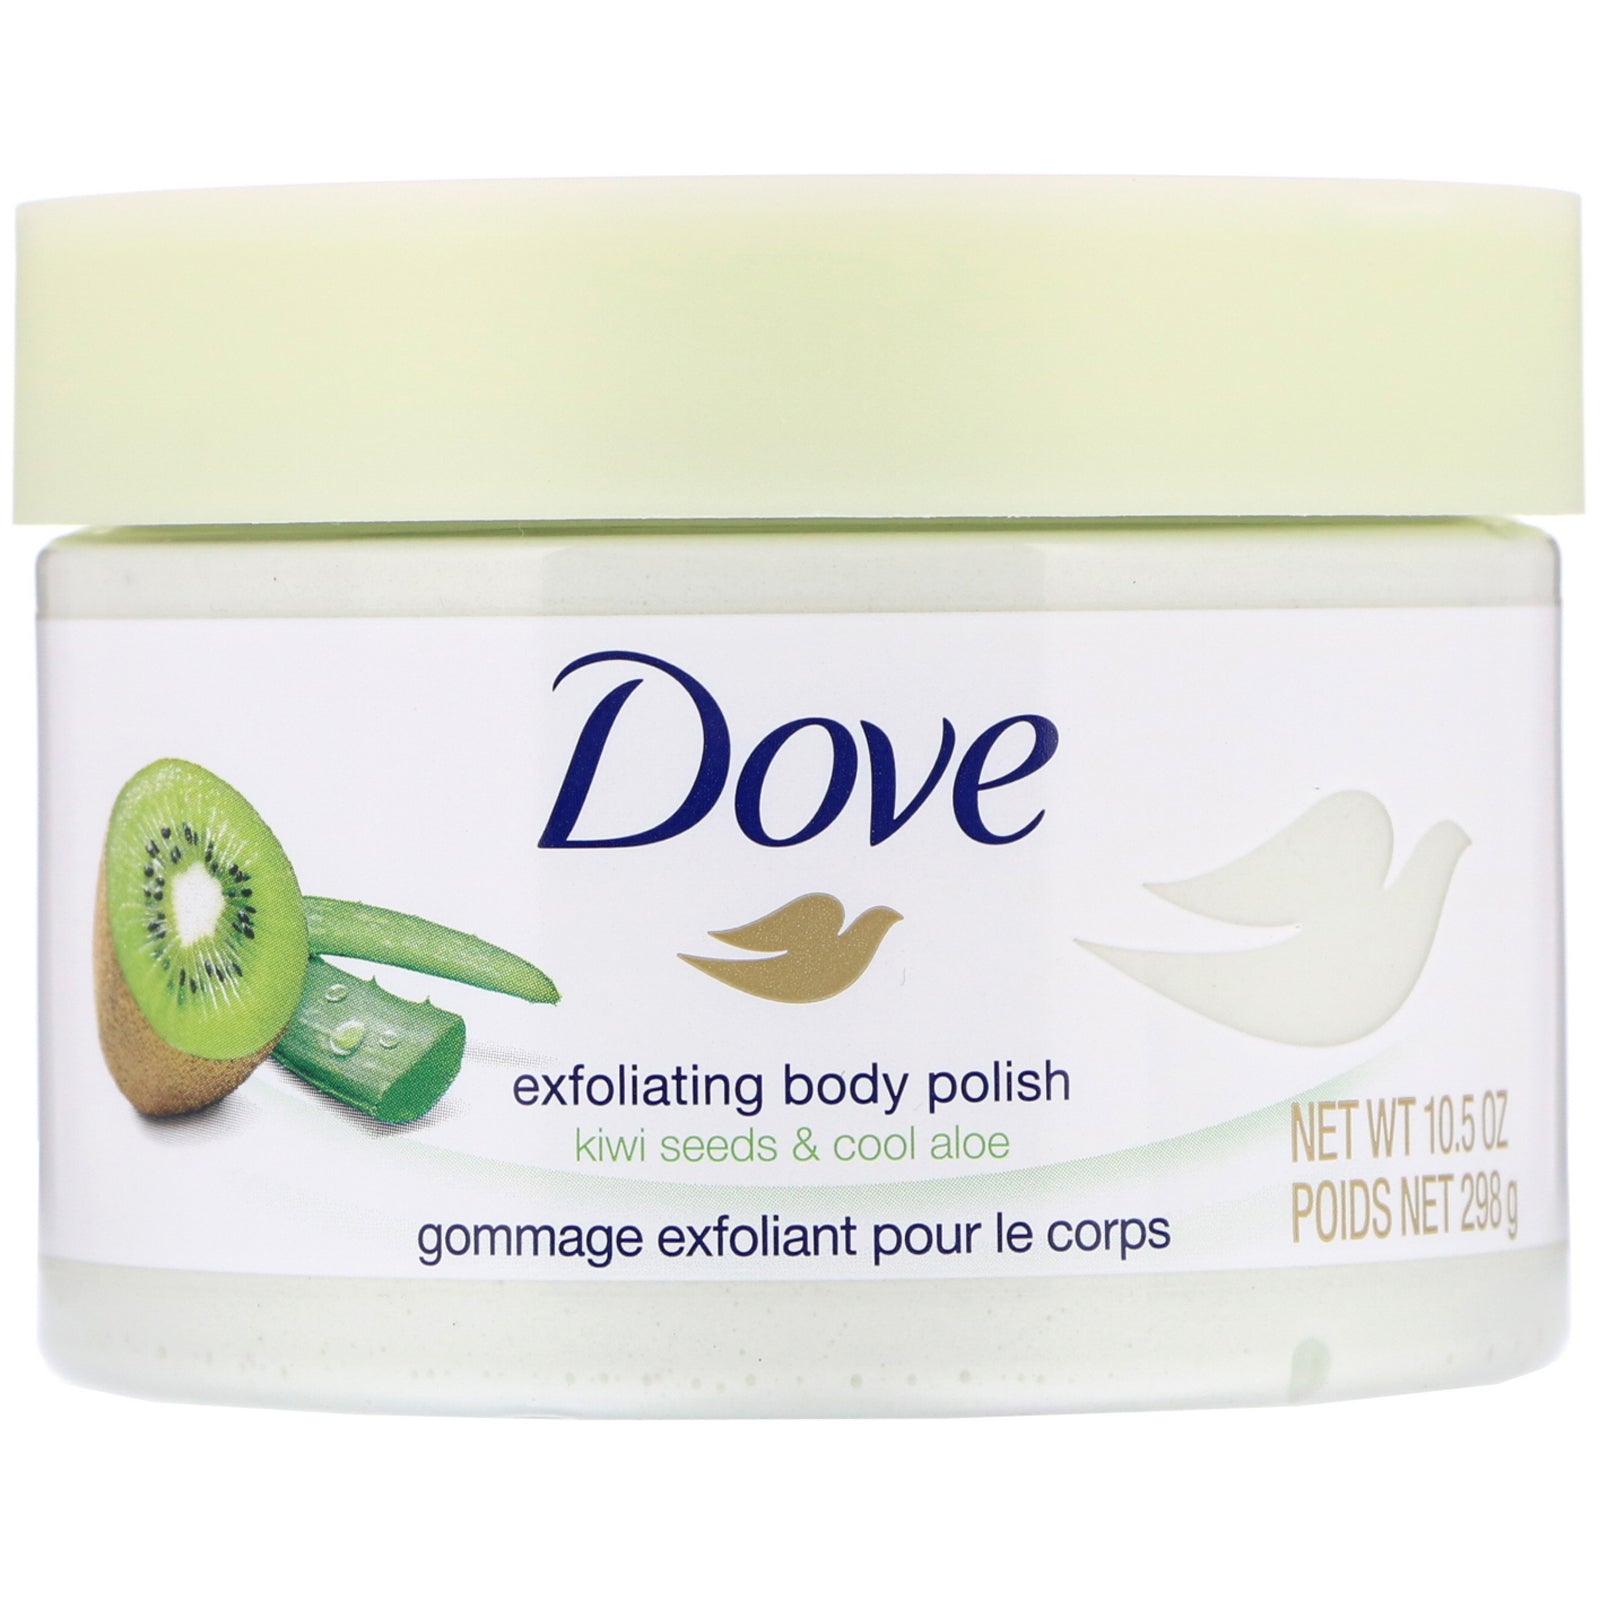 Dove, Exfoliating Body Polish, Kiwi Seeds & Cool Aloe, 10.5 oz (298 g)